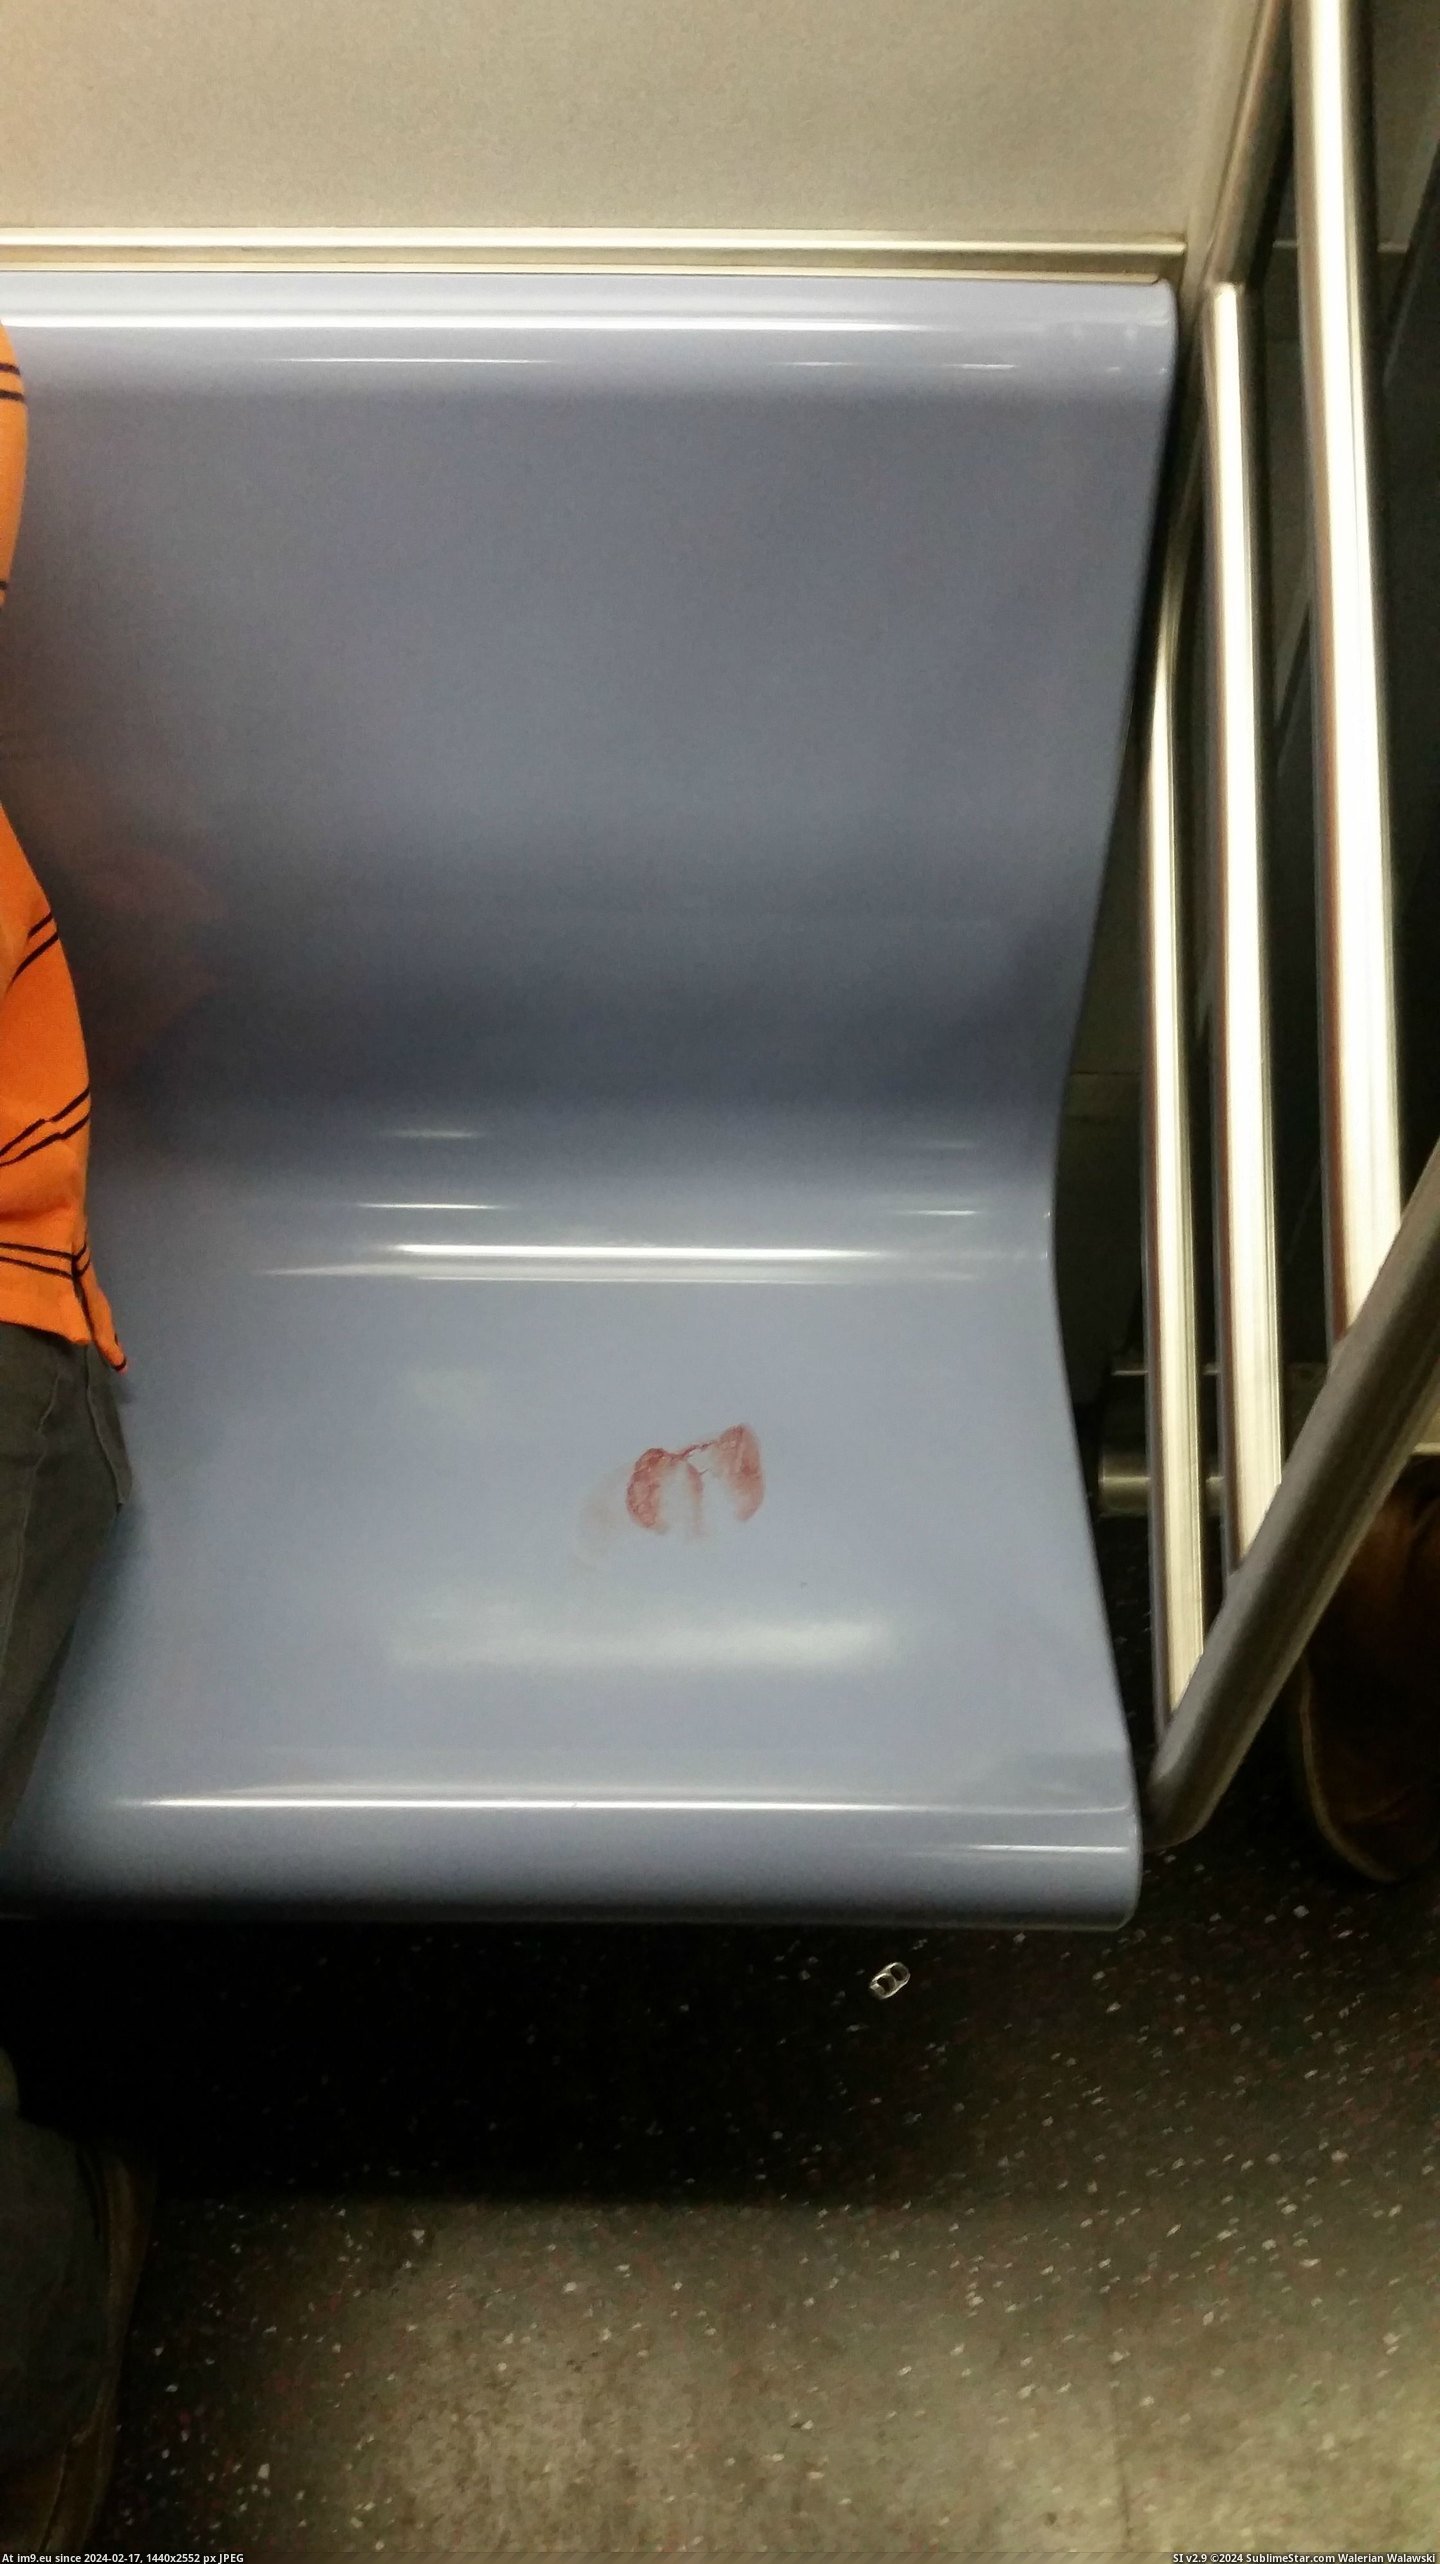 #Wtf #Kiss #Subway #Sealed #Seat #Kinda [Wtf] Subway seat sealed with a kiss, kinda. Pic. (Изображение из альбом My r/WTF favs))